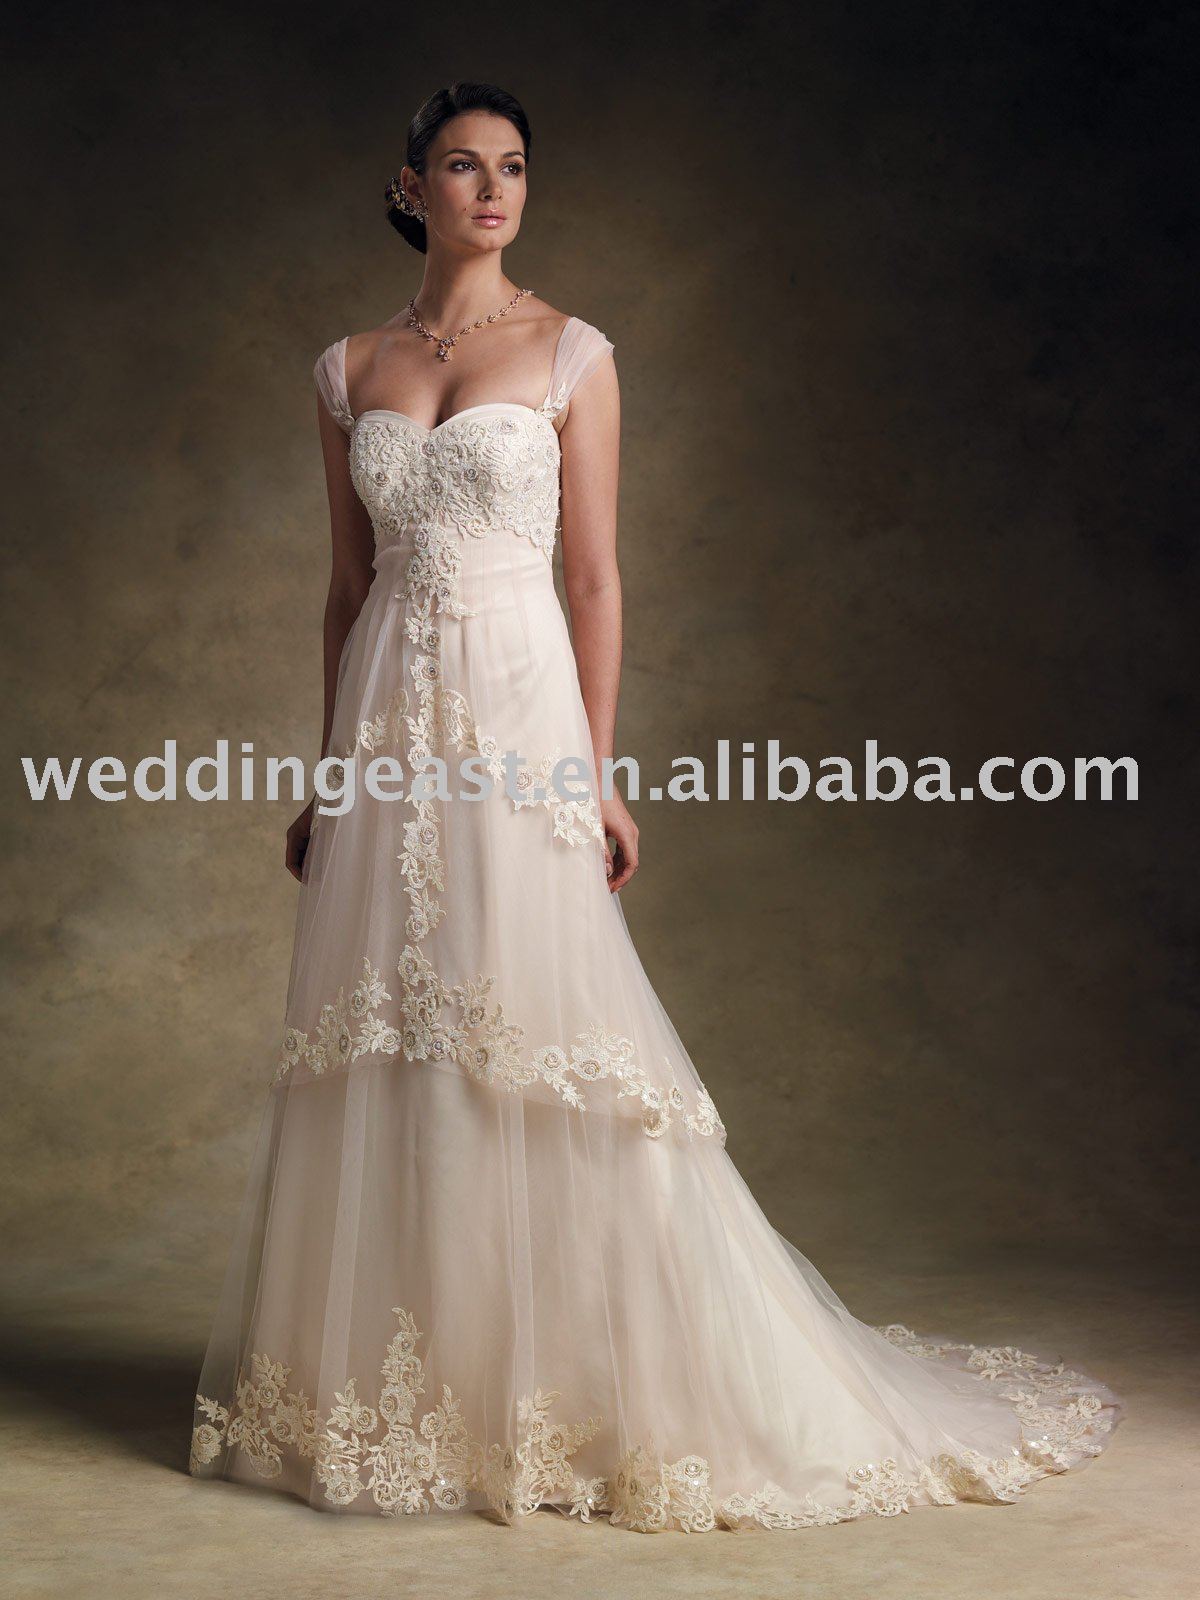 strapless wedding dresses vera wang cap sleeve wedding gown on Pictures Of Cap Sleeve Wedding Gown